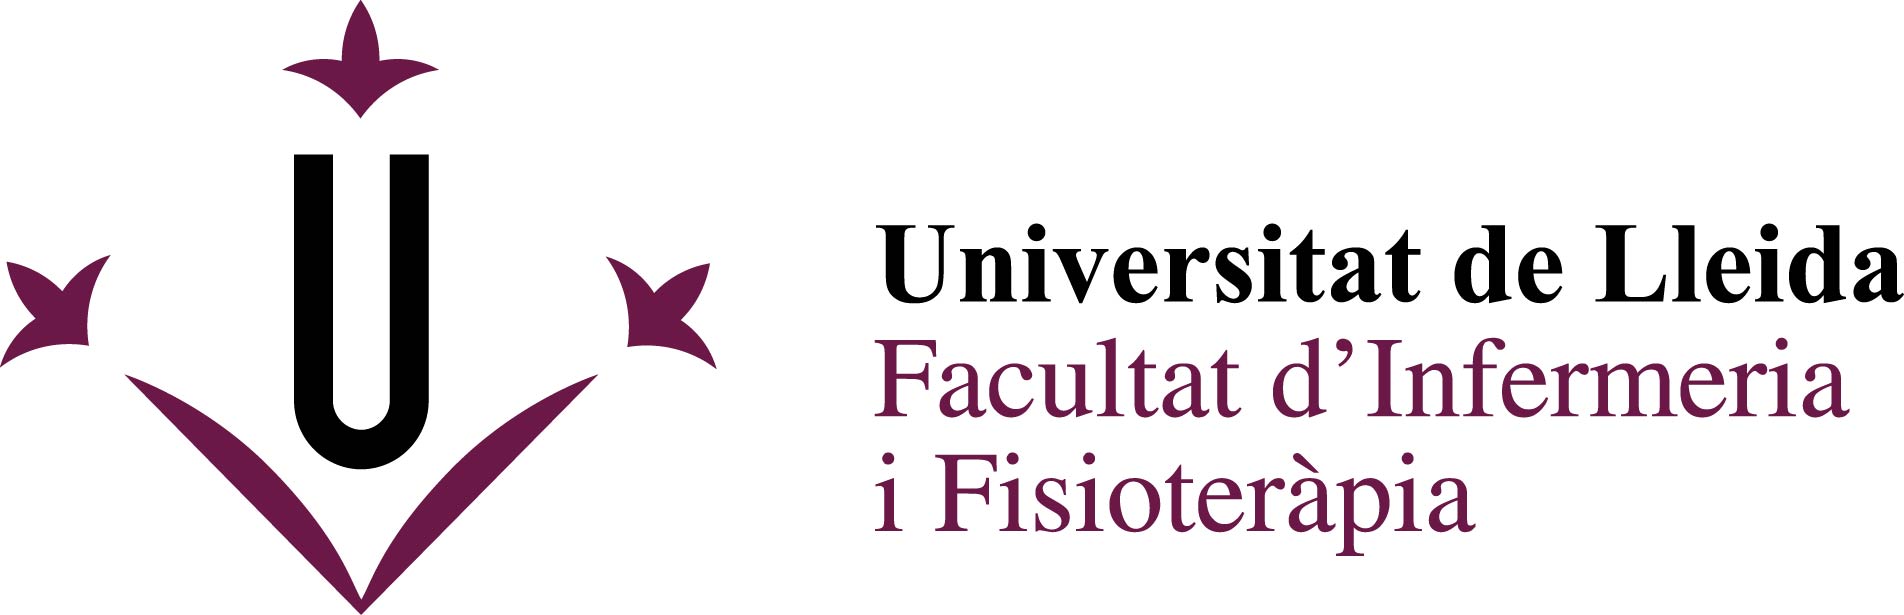 Universitat de lleida Logo